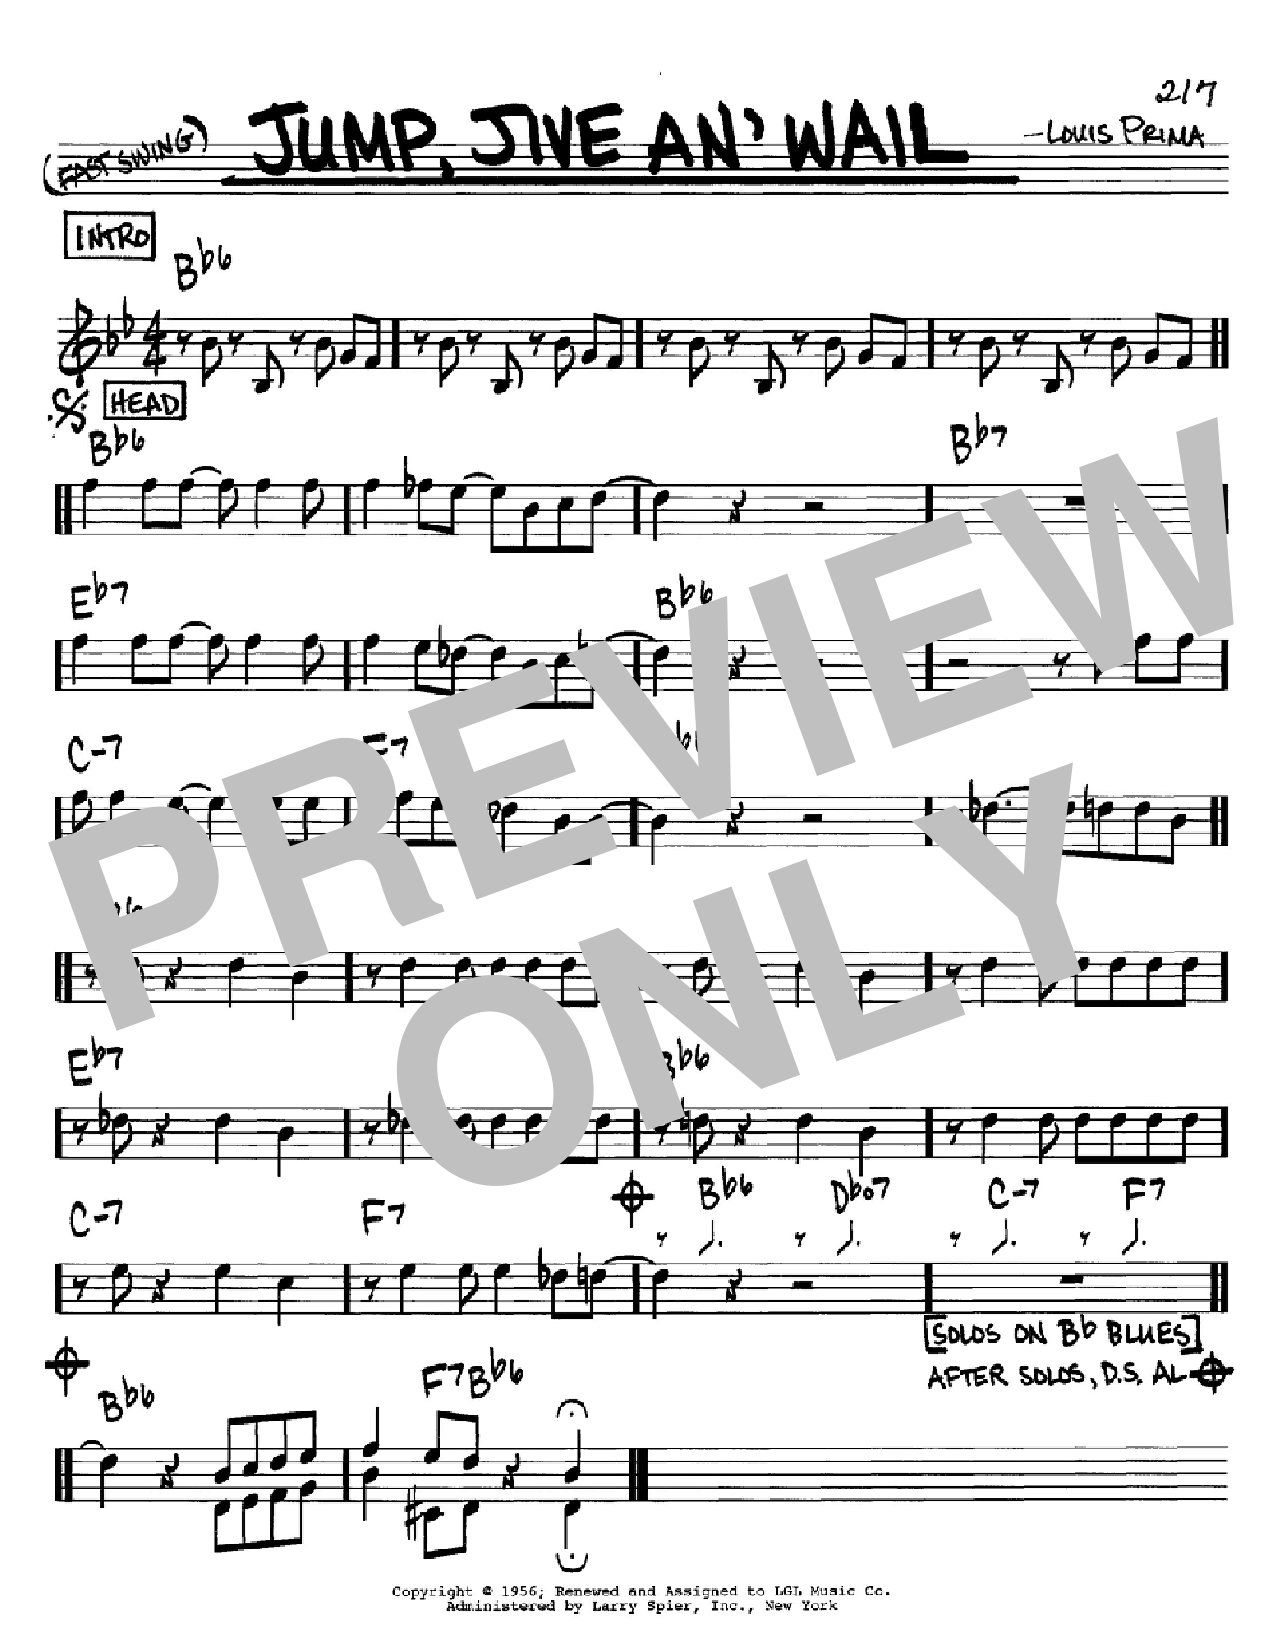 Louis Prima Jump, Jive An' Wail Sheet Music Notes & Chords for Alto Saxophone - Download or Print PDF